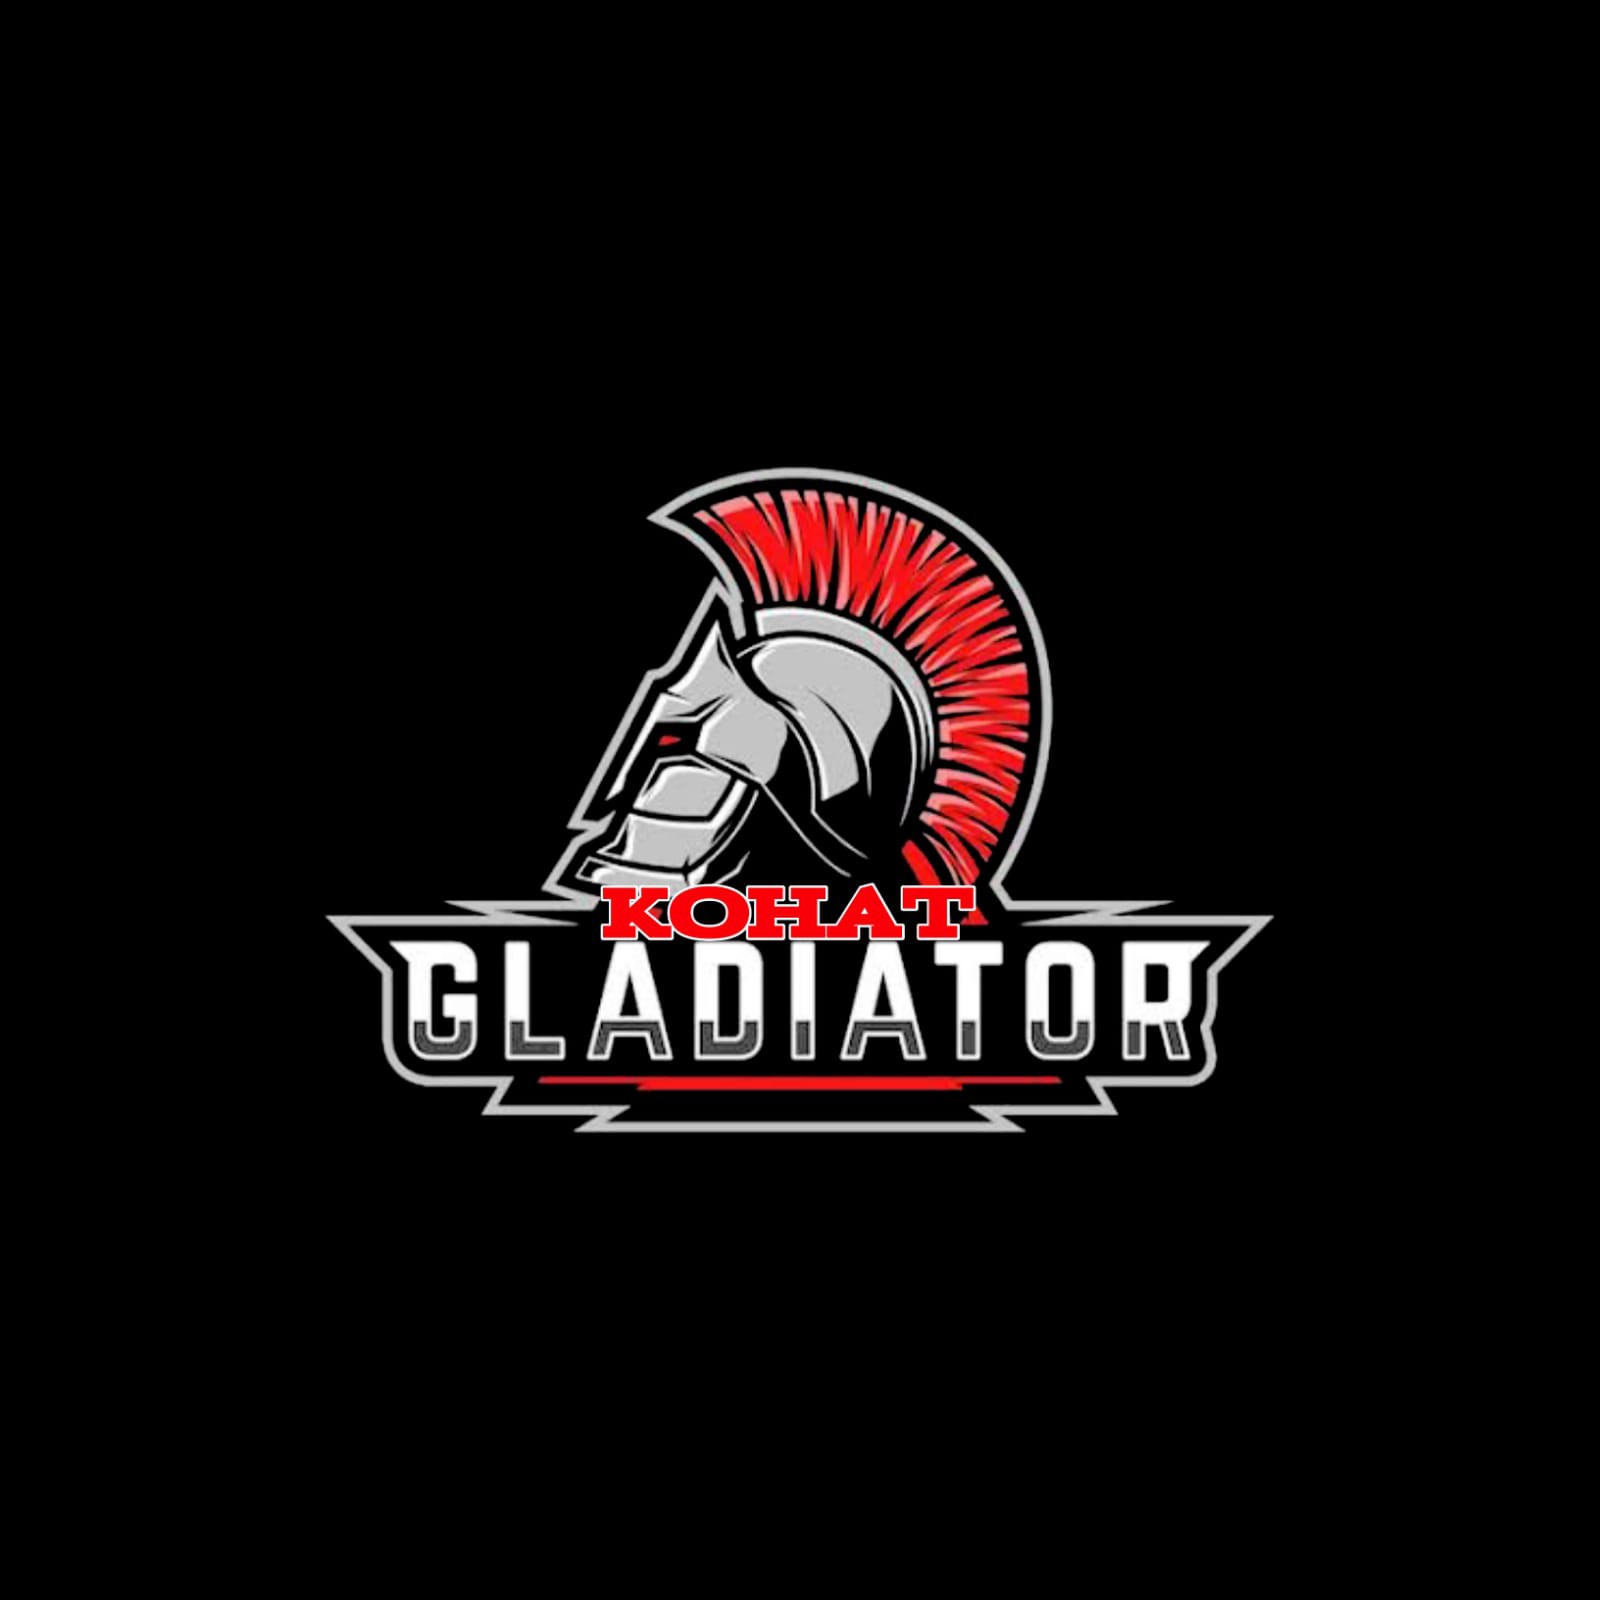 Kohat Gladiator